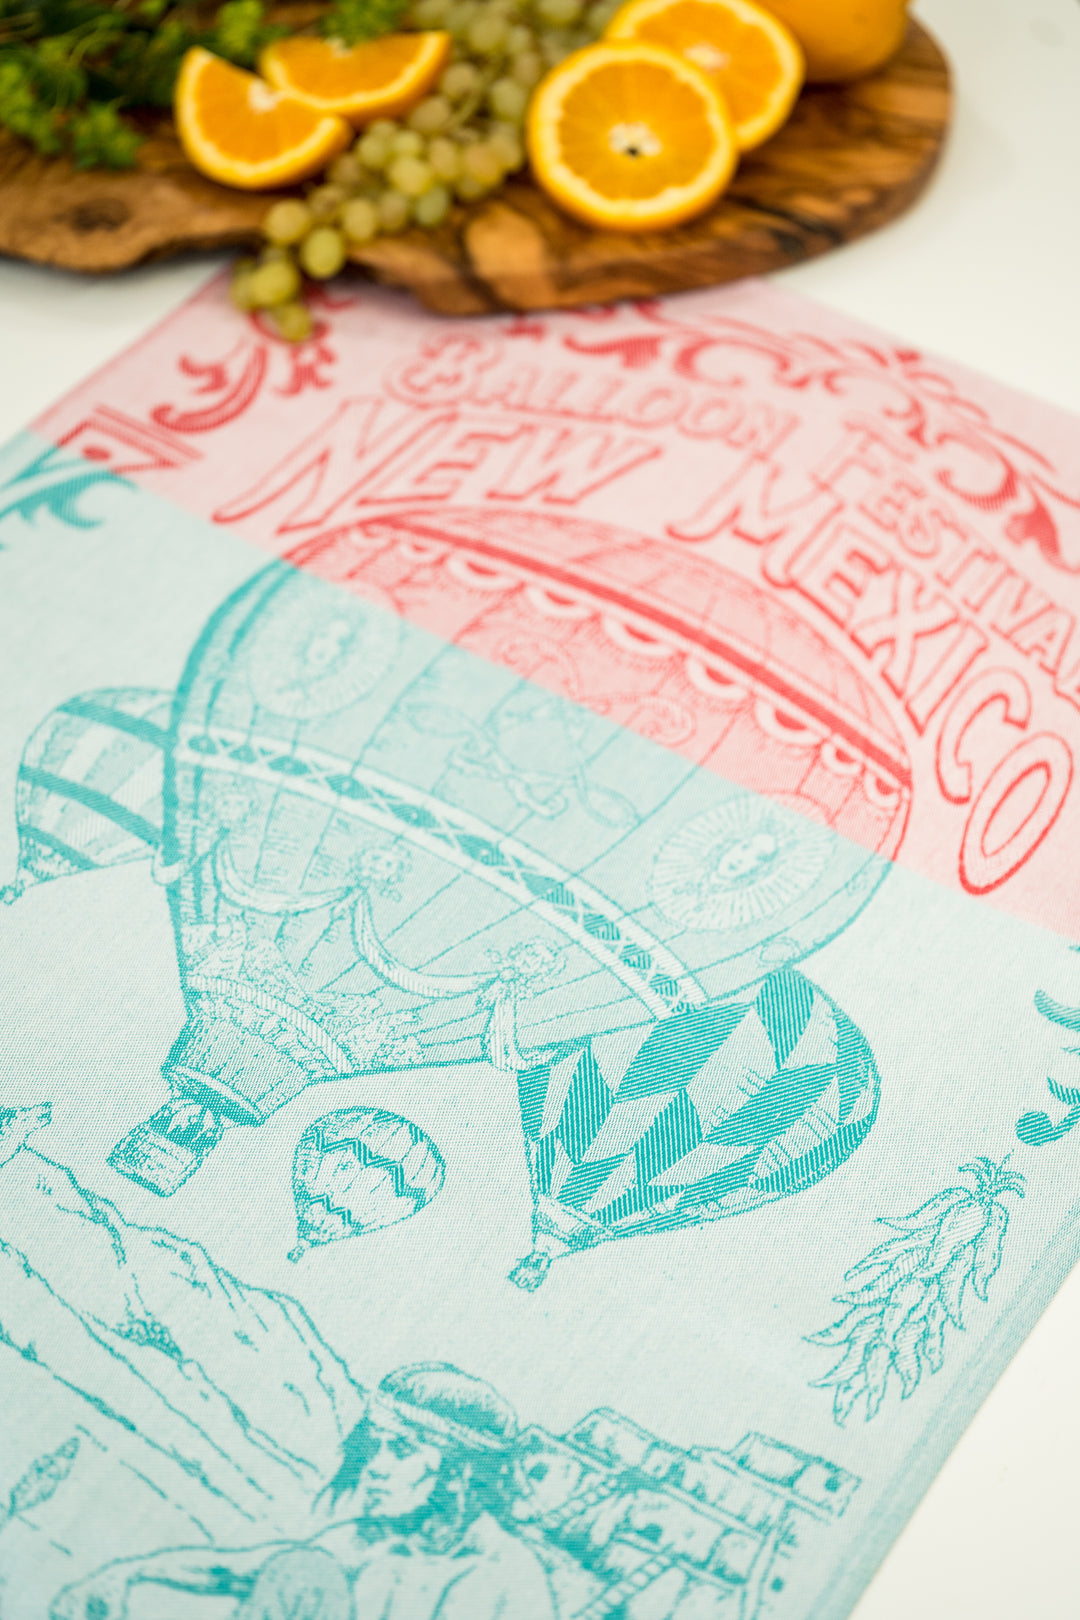 Hot Air Balloon Jacquard Woven Kitchen Tea Towel - Teal / Orange / Red - Crystal Arrow